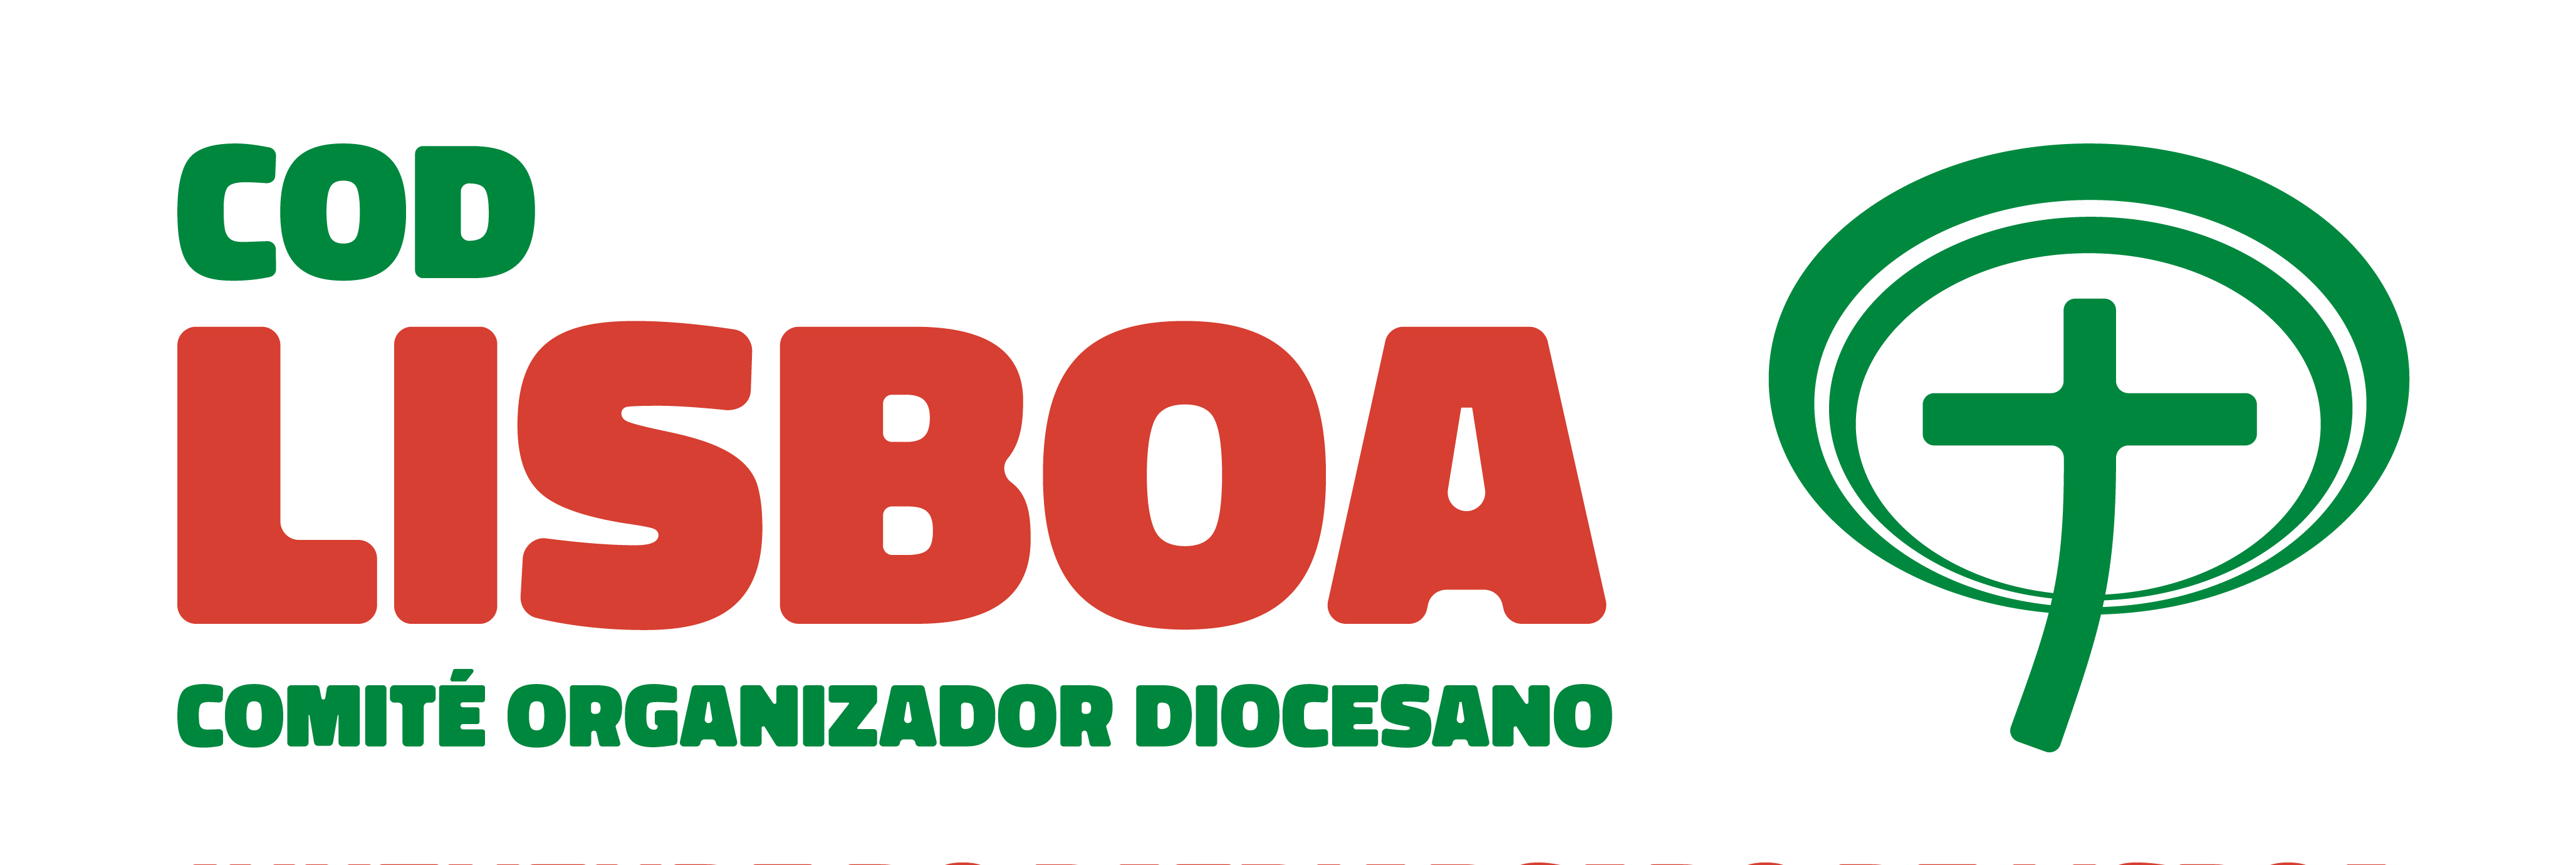 Logotipo COD Lisboa